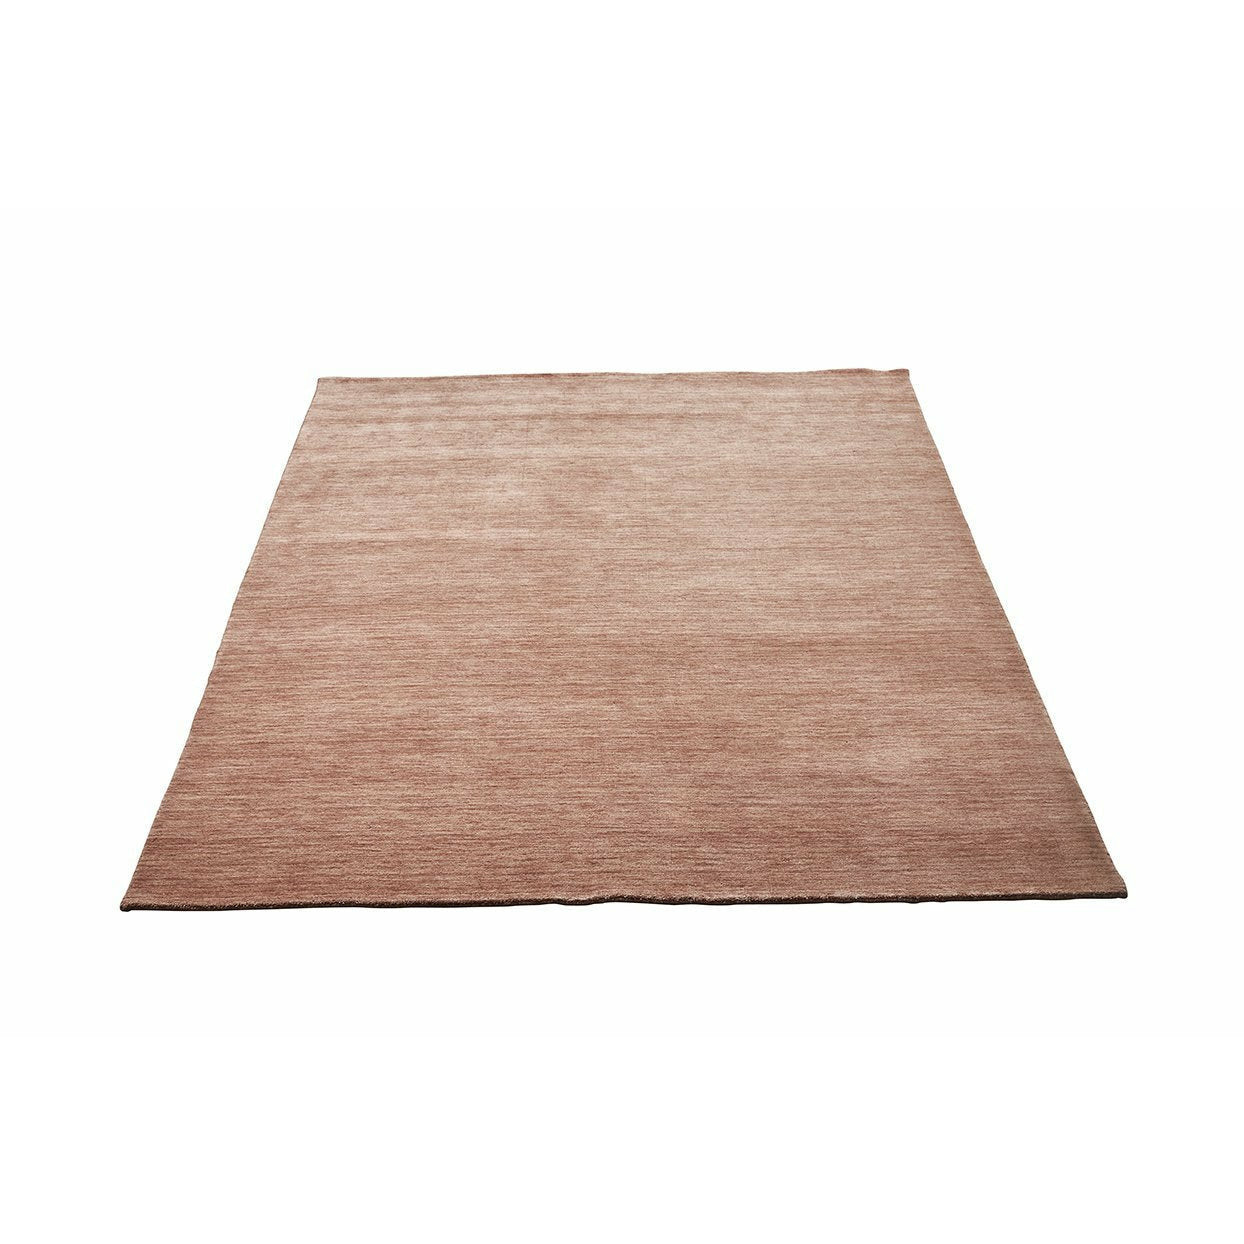 Crema de café de la alfombra de Massimo Earth, 250x300 cm